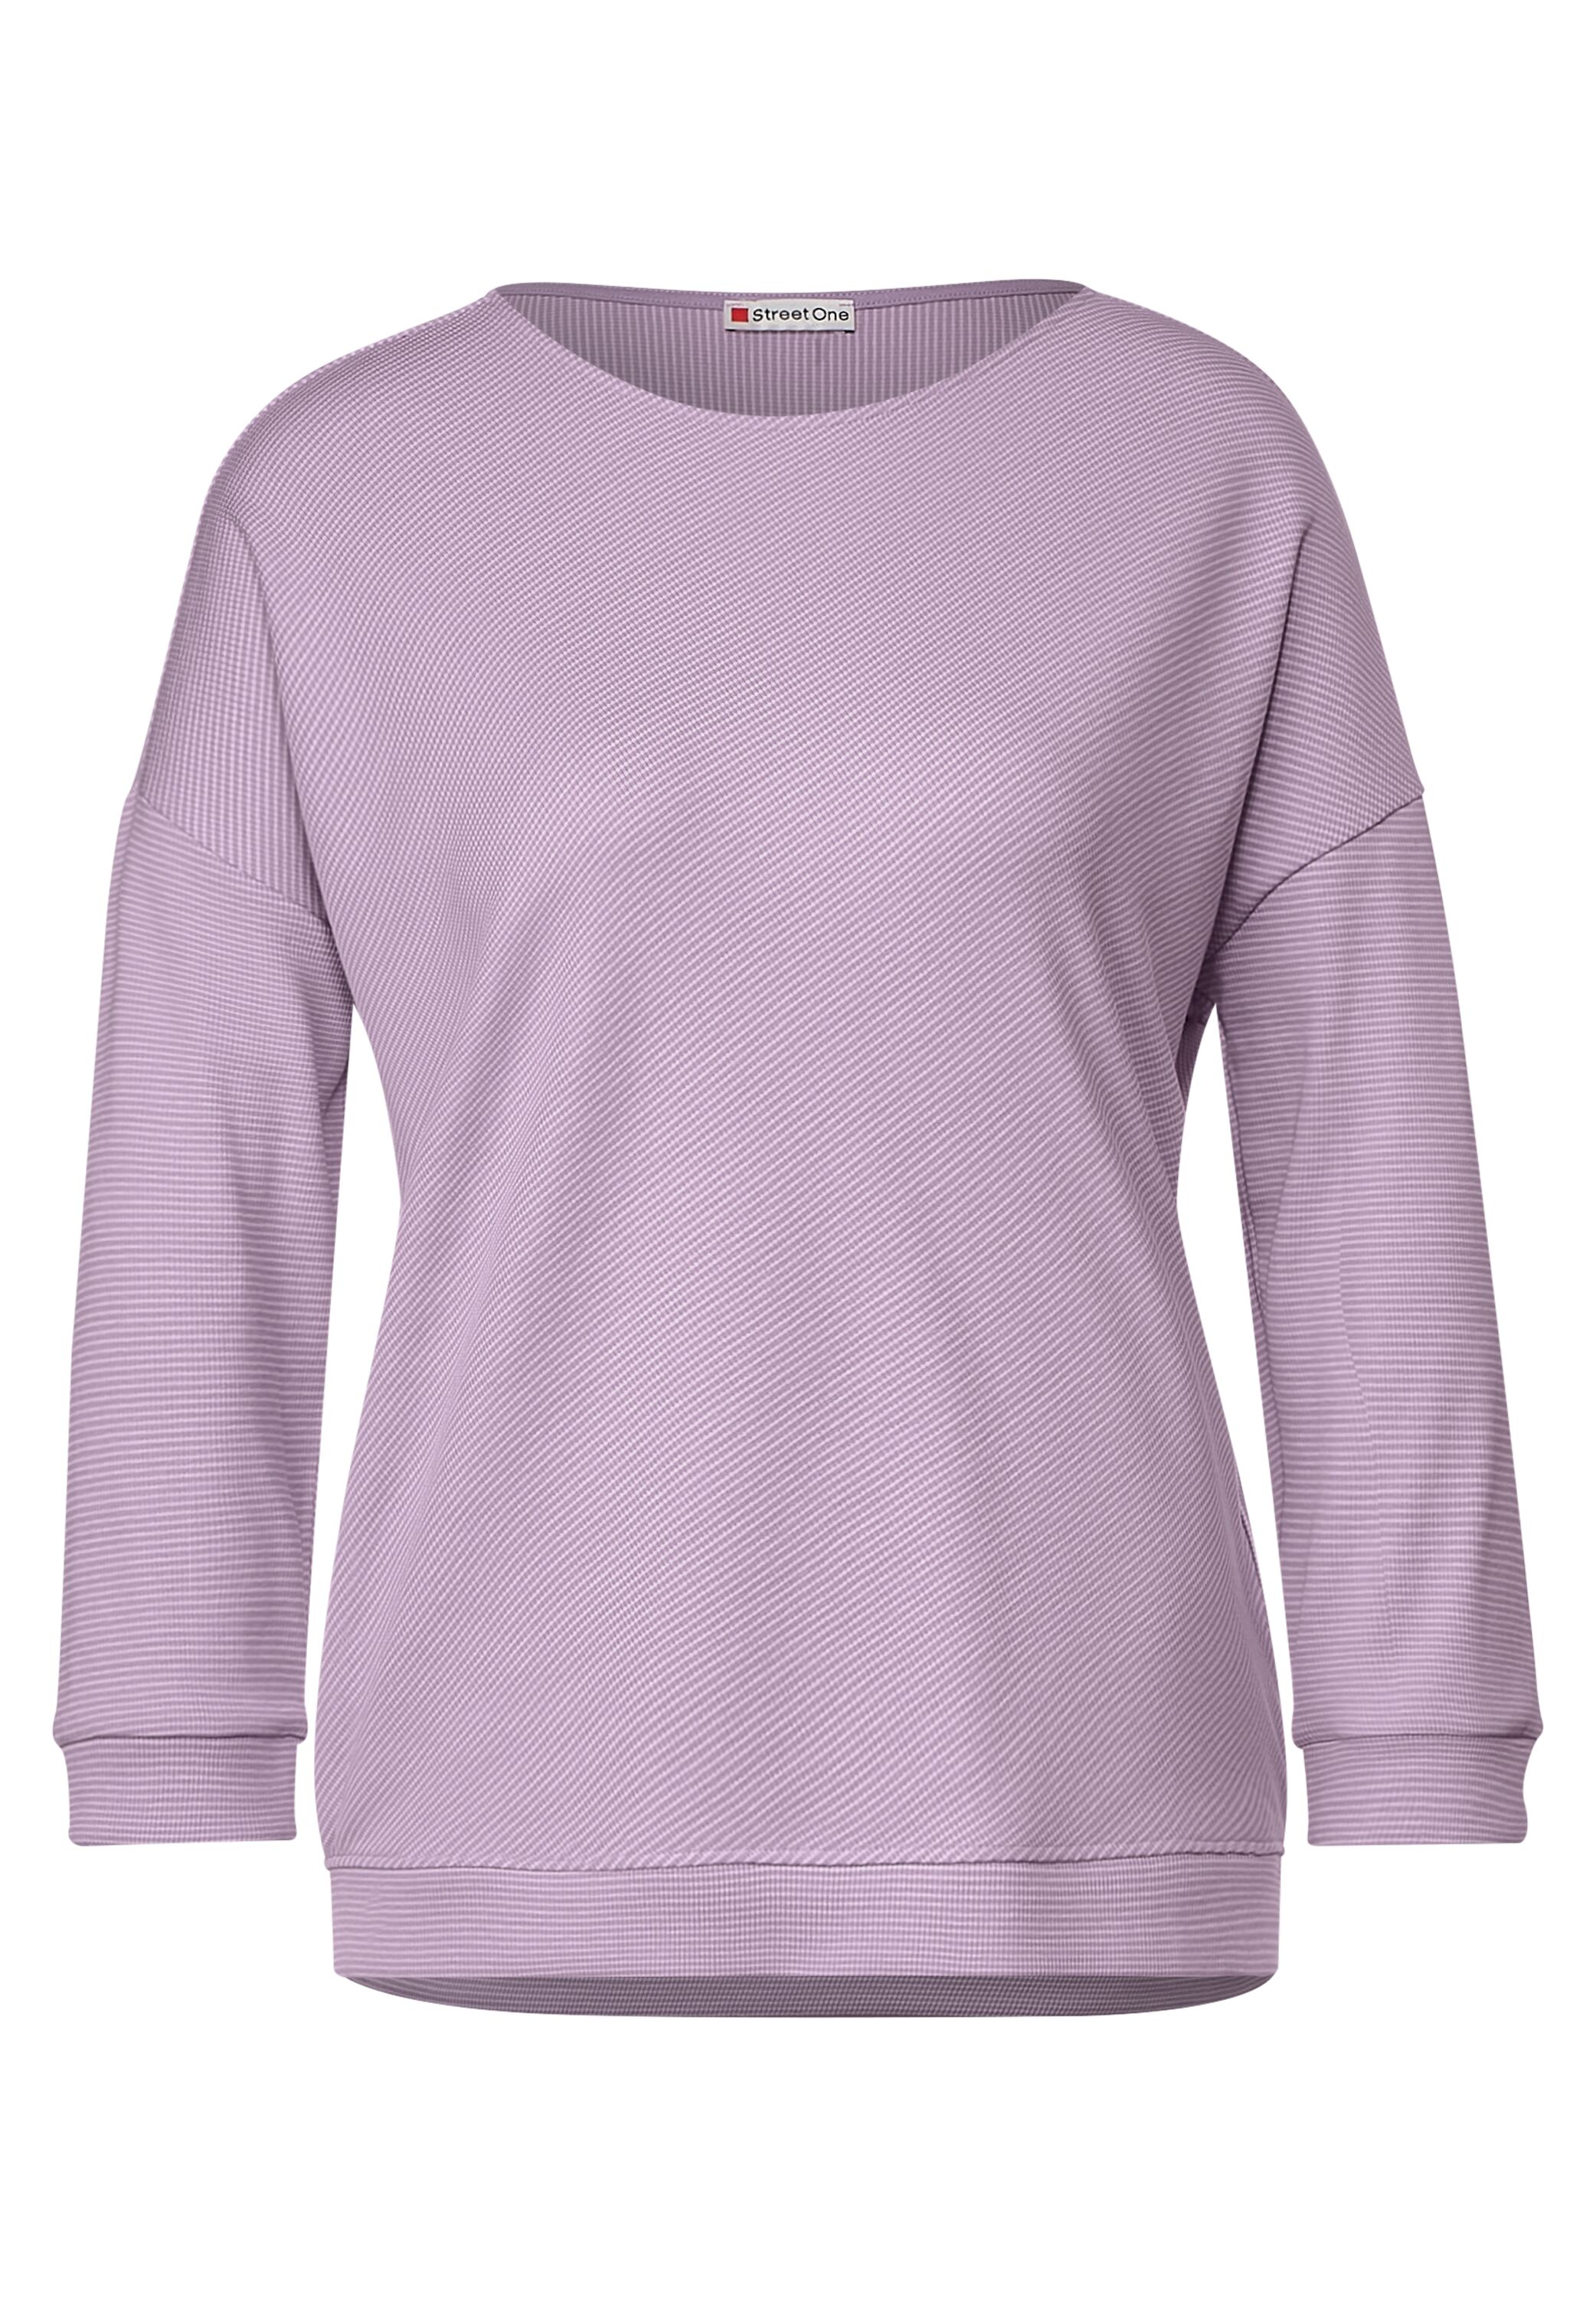 Street One Streifenshirt CONCEPT in Lilac reduziert Mode - Pure im SALE A320427-25289 Soft